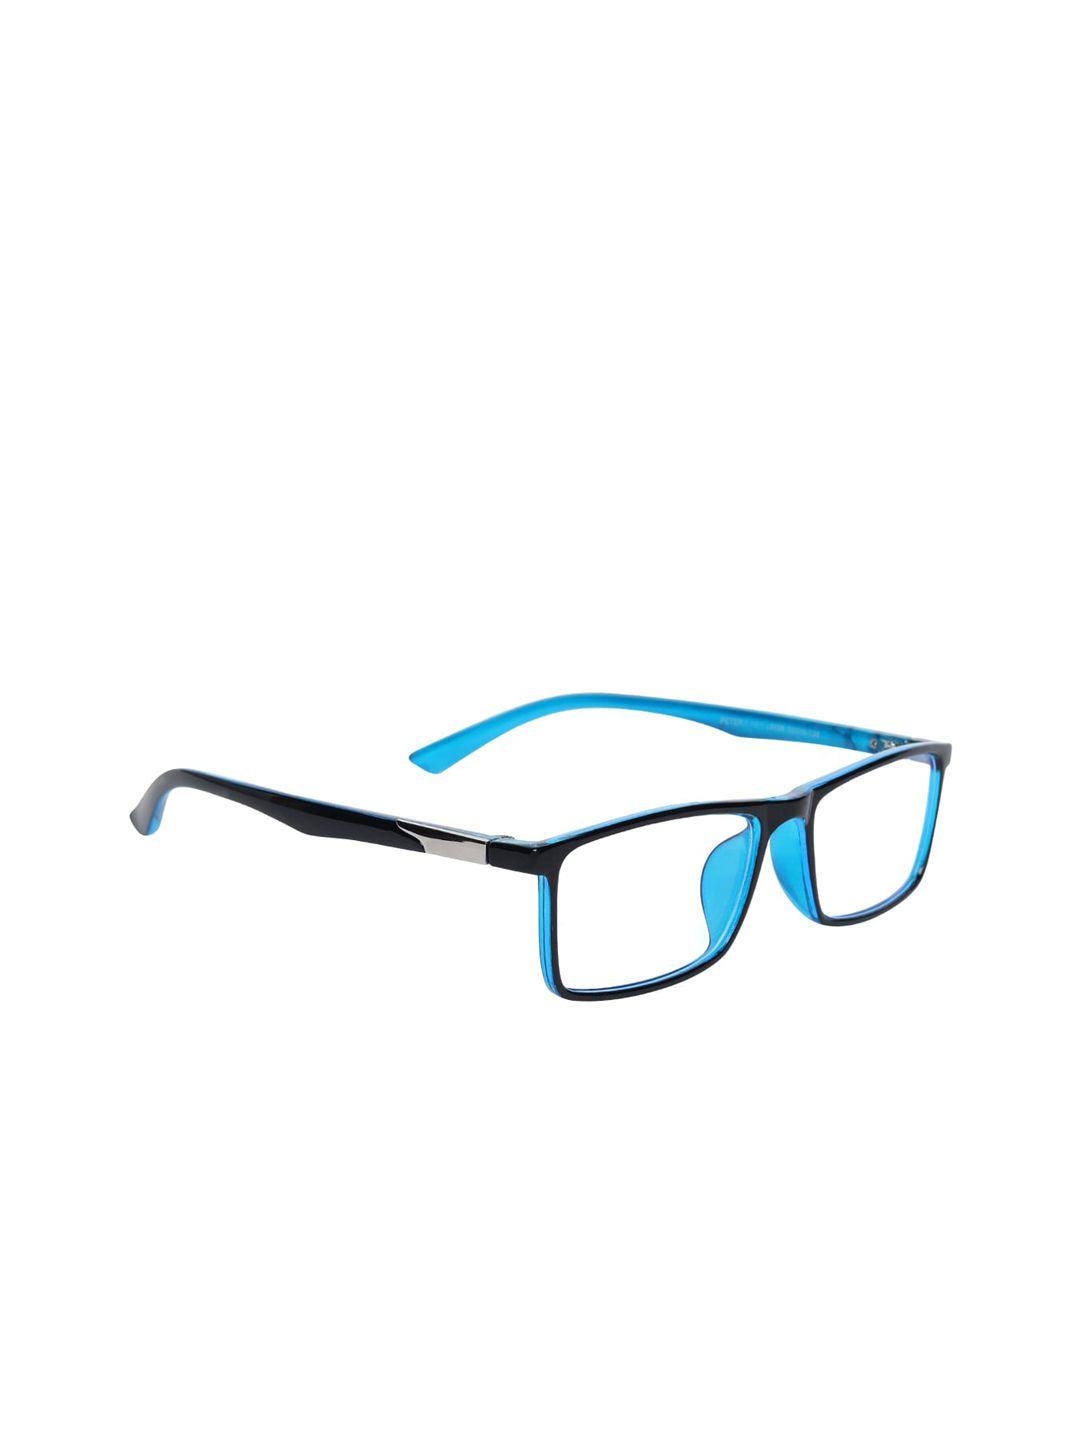 peter jones eyewear unisex black & blue solid light blocking rectangle frames ag6056ibl